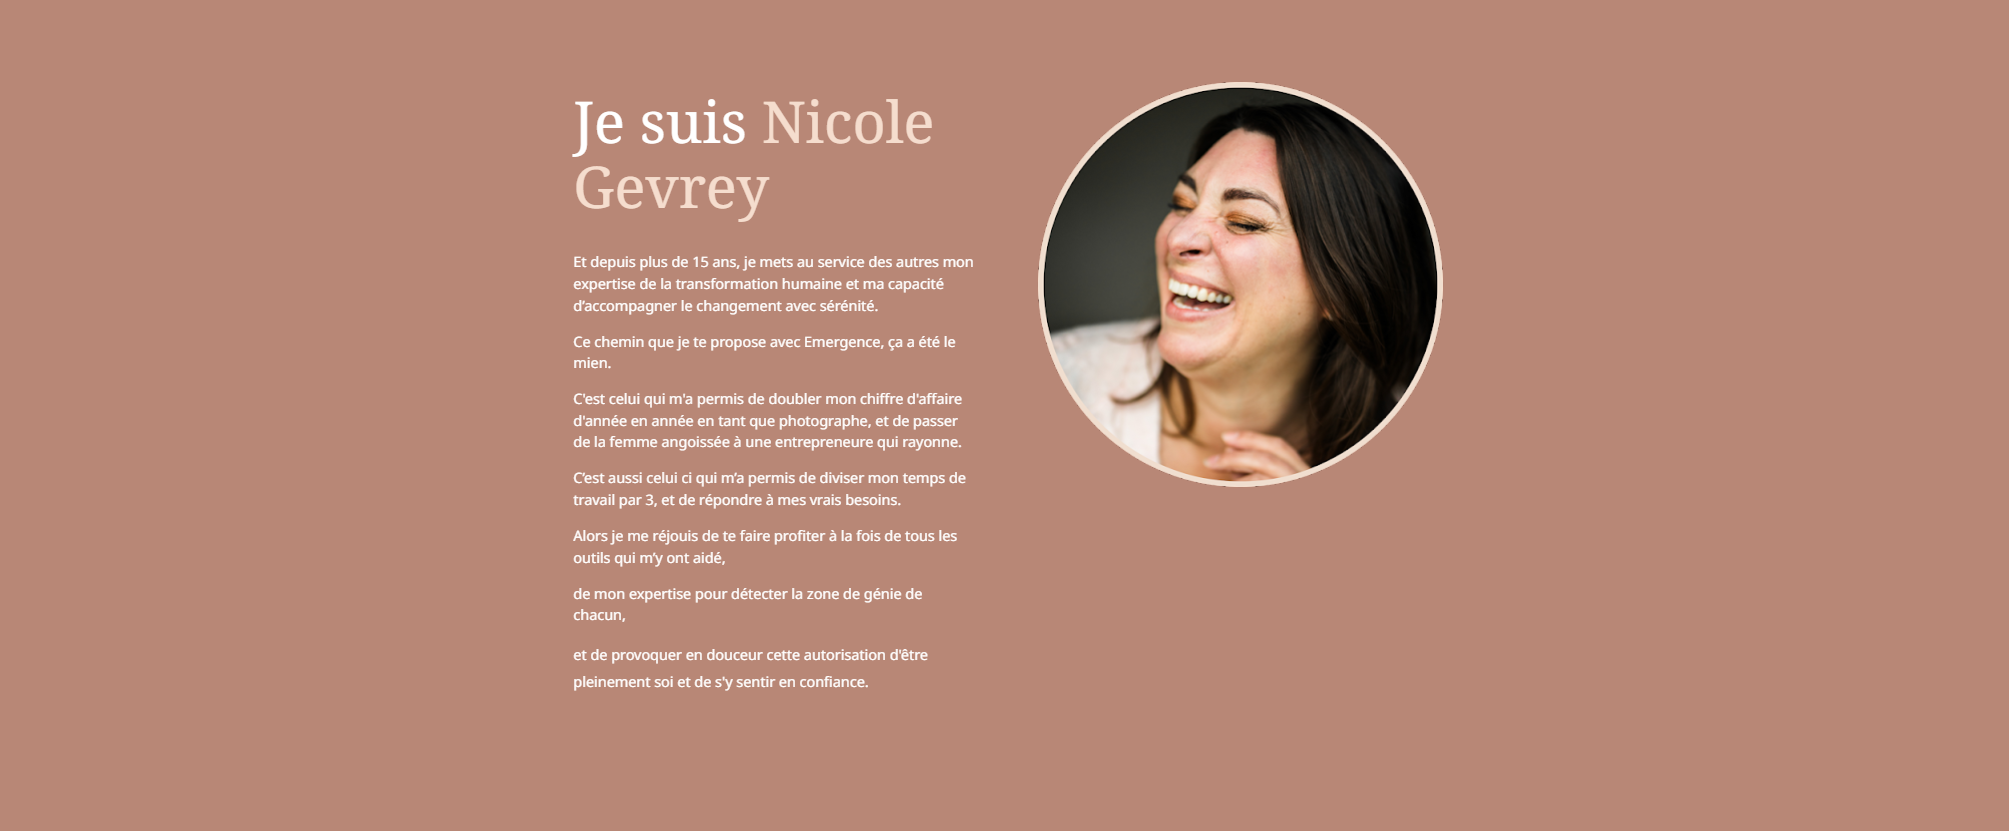 Présentation Nicole Gevrey